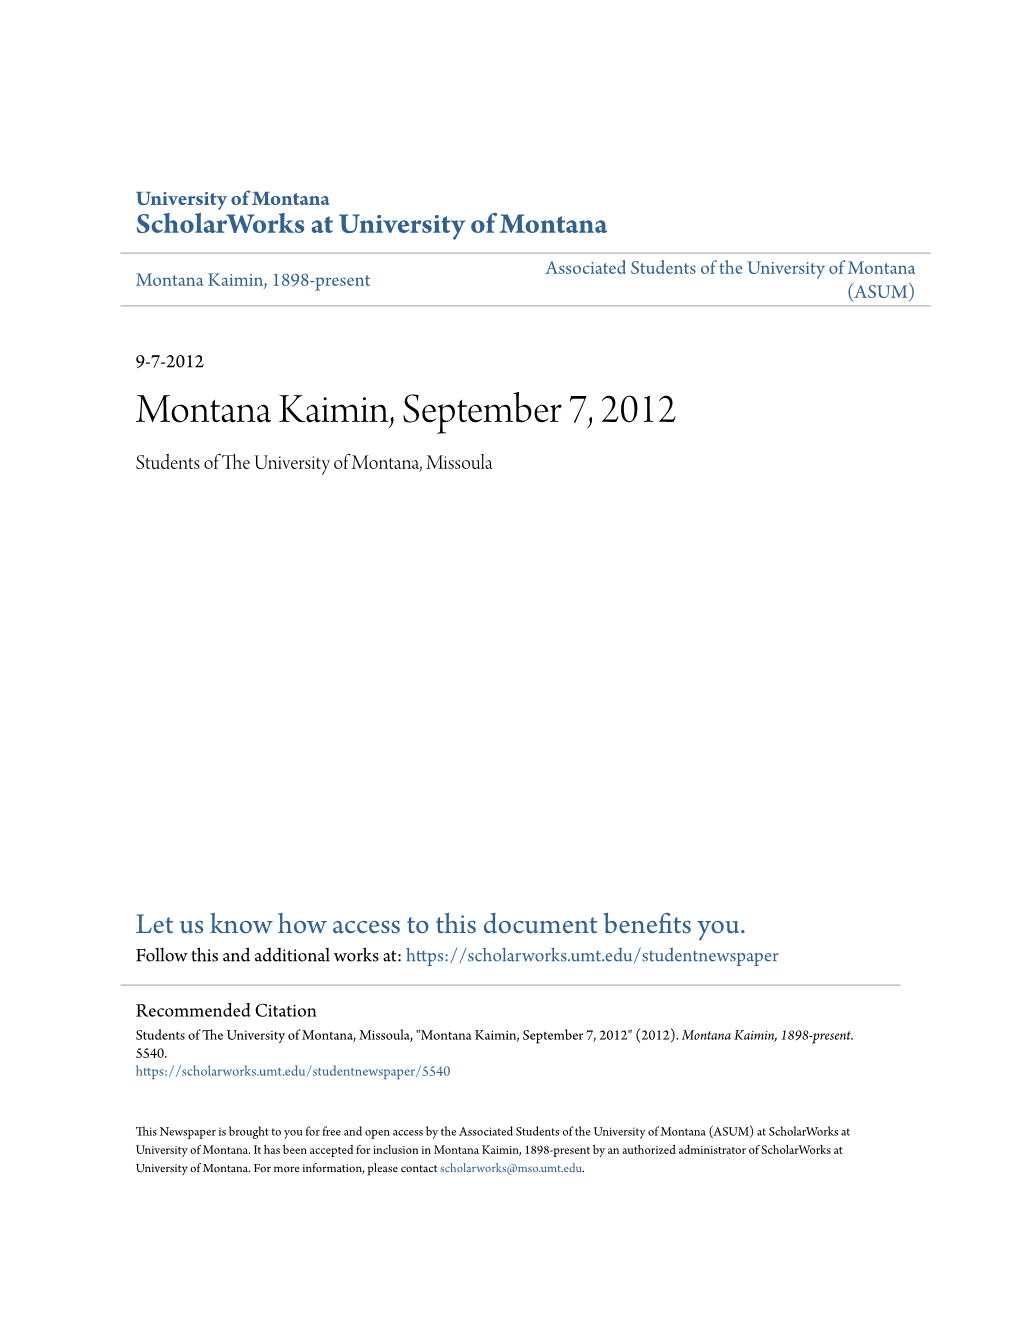 Montana Kaimin, September 7, 2012 Students of the Niu Versity of Montana, Missoula